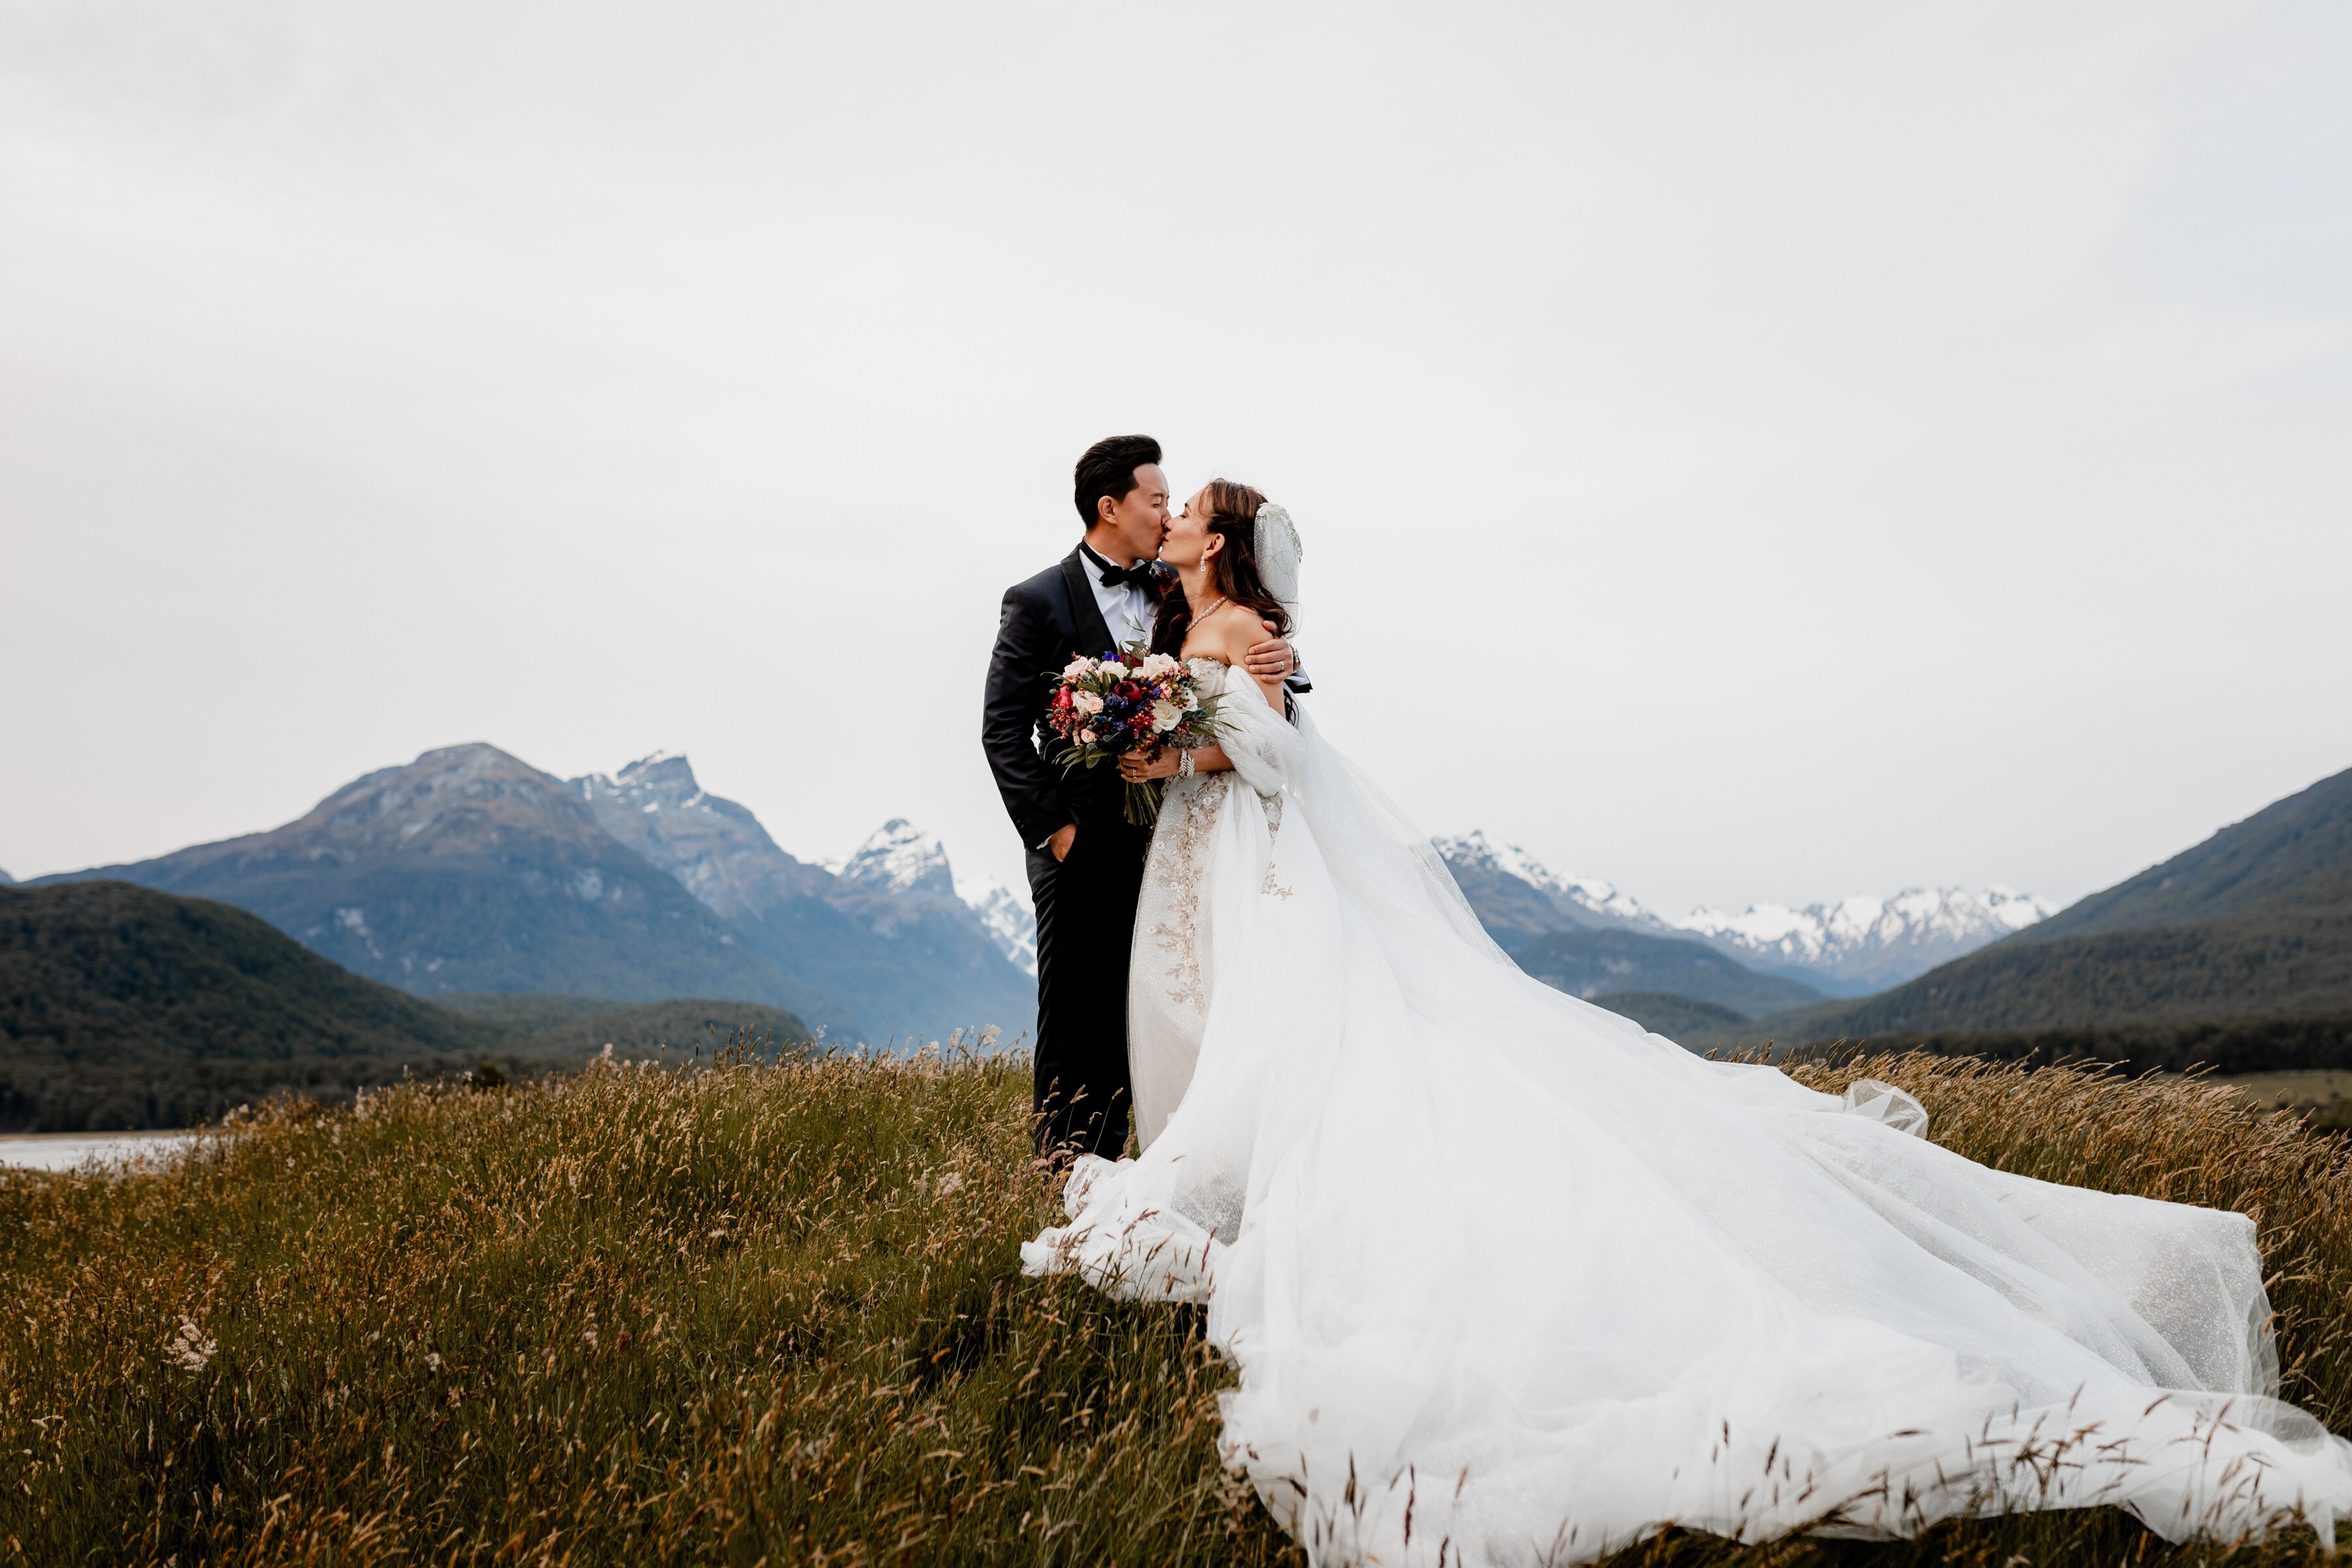 Han Geng and Celina Jade’s wedding in New Zealand on December 31, 2019. Photo: Nicole Please